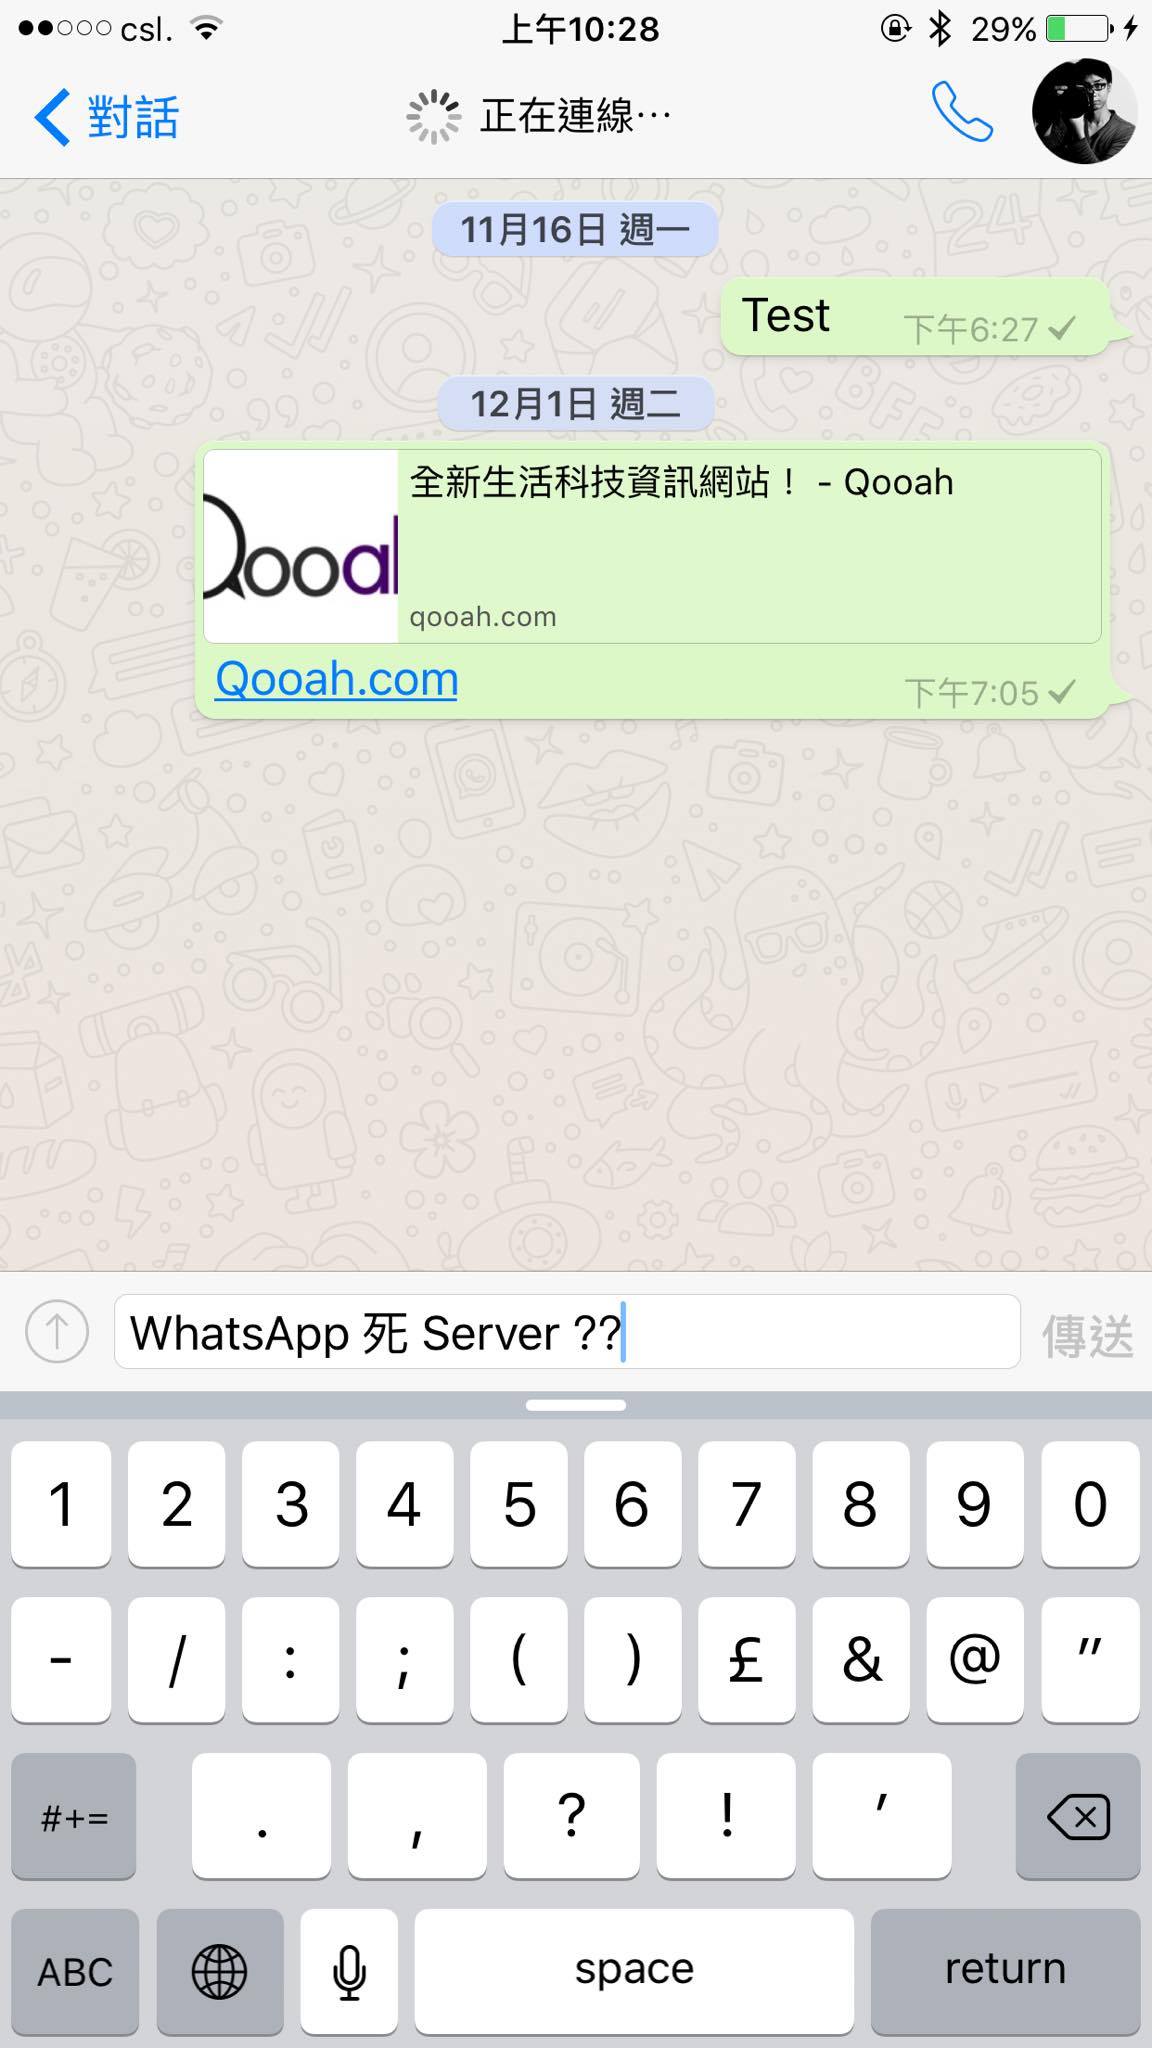 whatsapp不能關屏後自動彈出訊息 - Android Phone 軟件 - Android Phone - 電腦領域 HKEPC ...